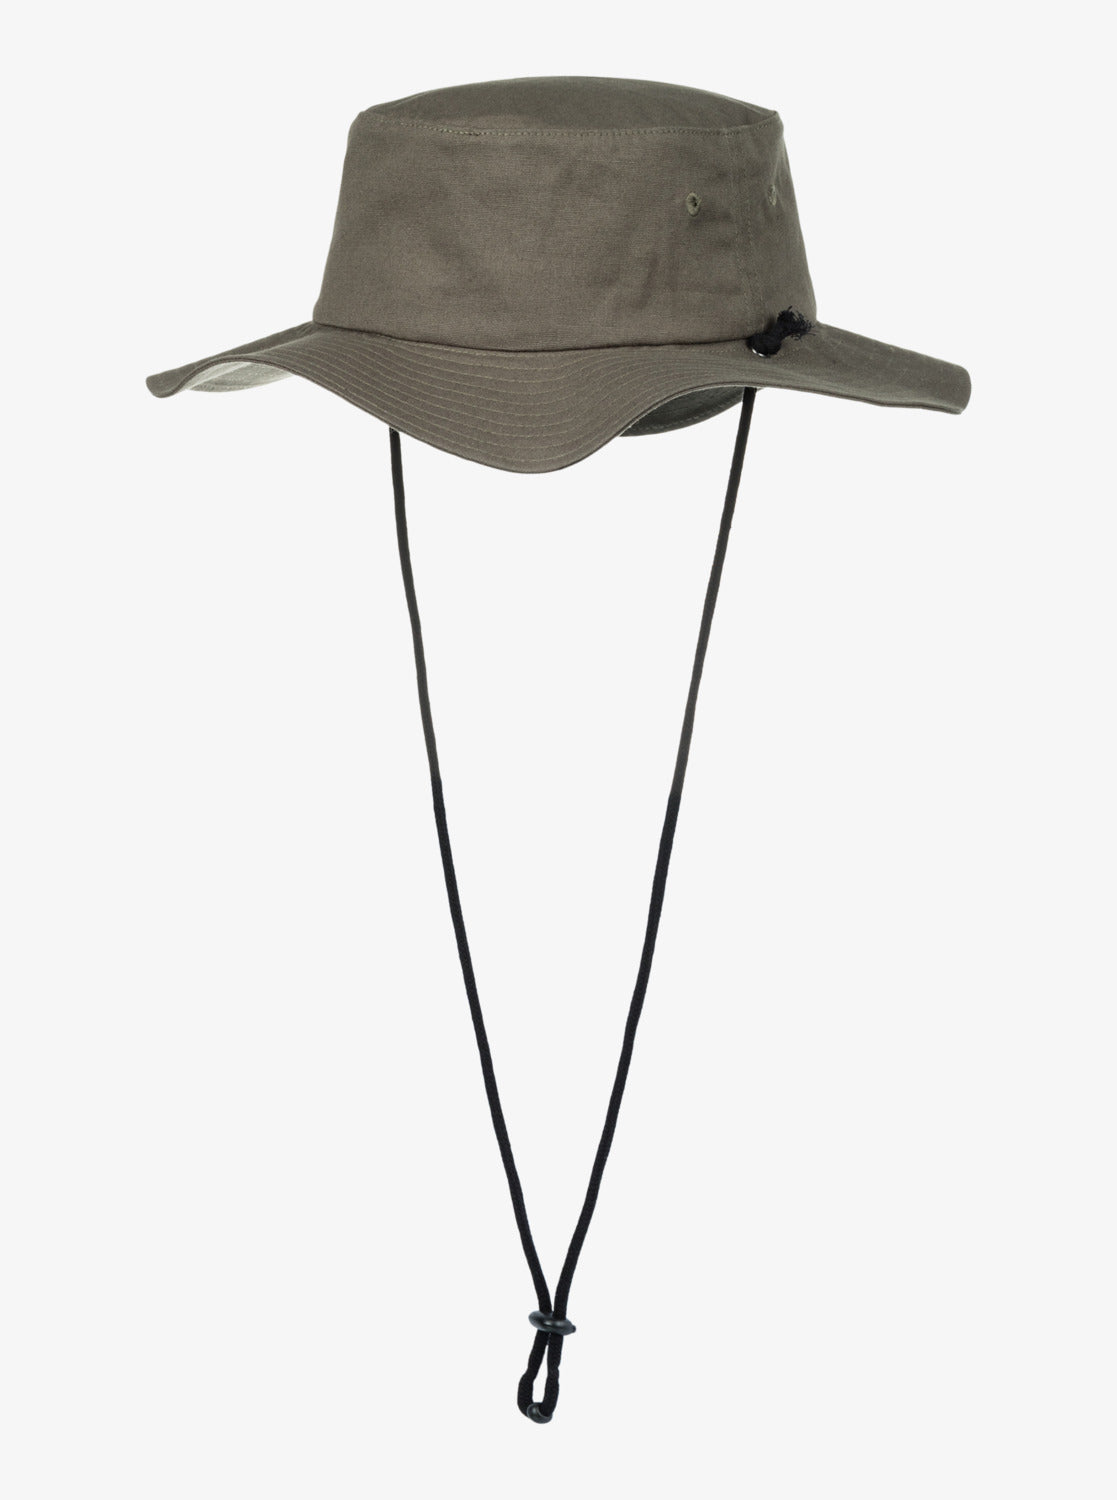 Quiksilver Bushmaster Hat - Thyme - S/M